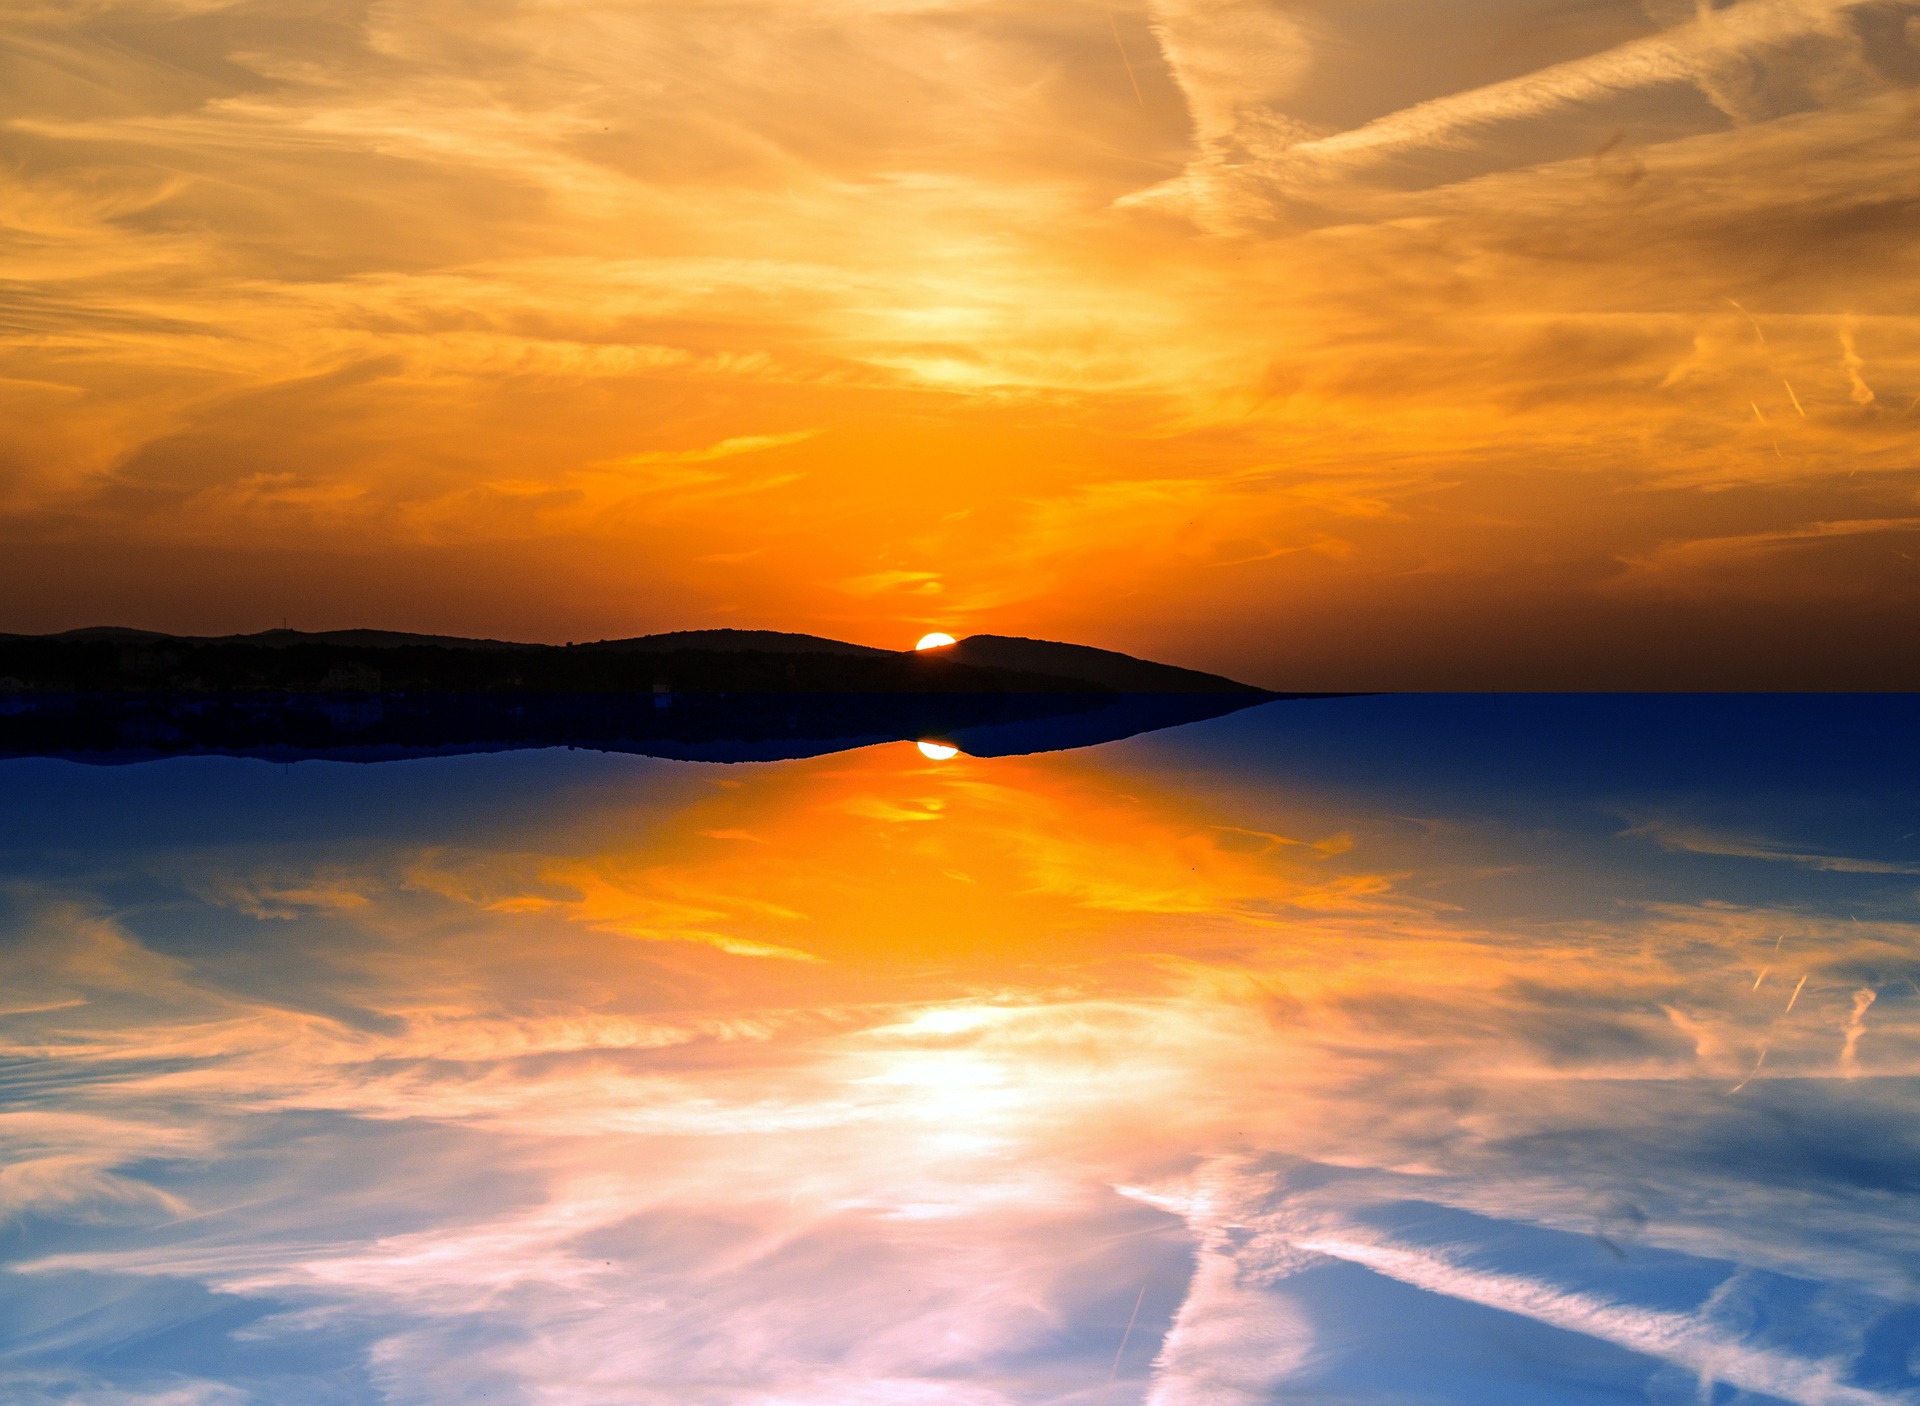 Evening reflections on sunset on lake